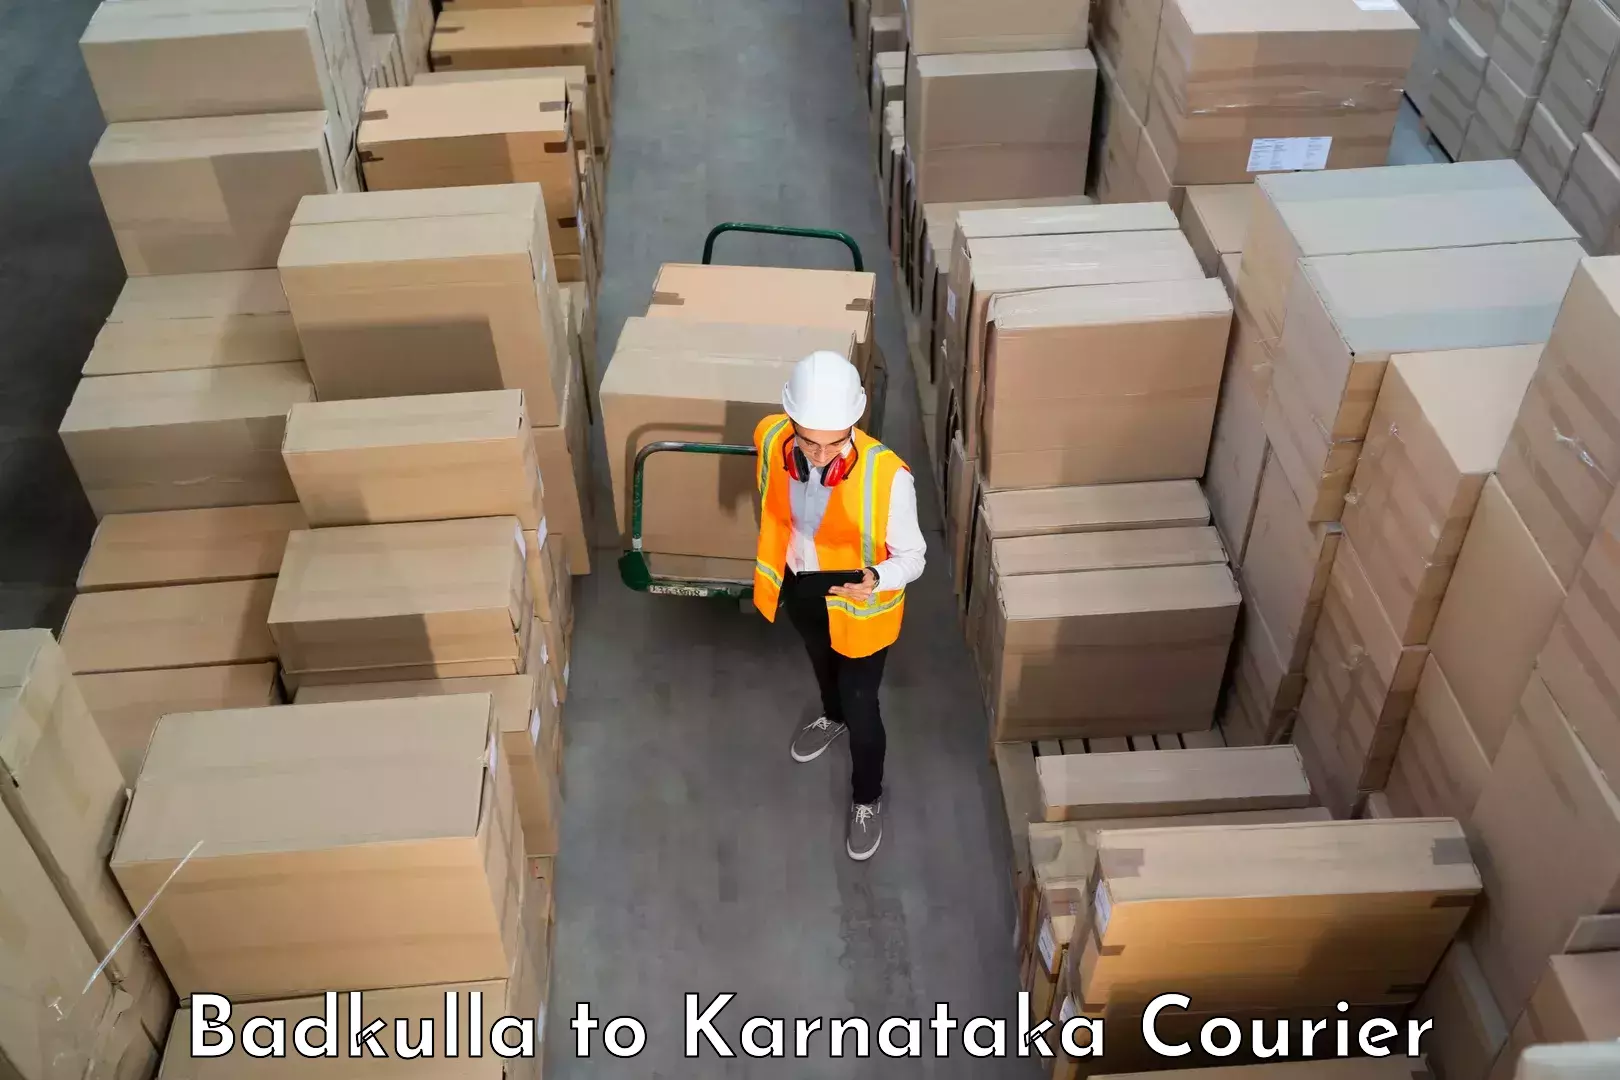 Professional moving company Badkulla to Bengaluru